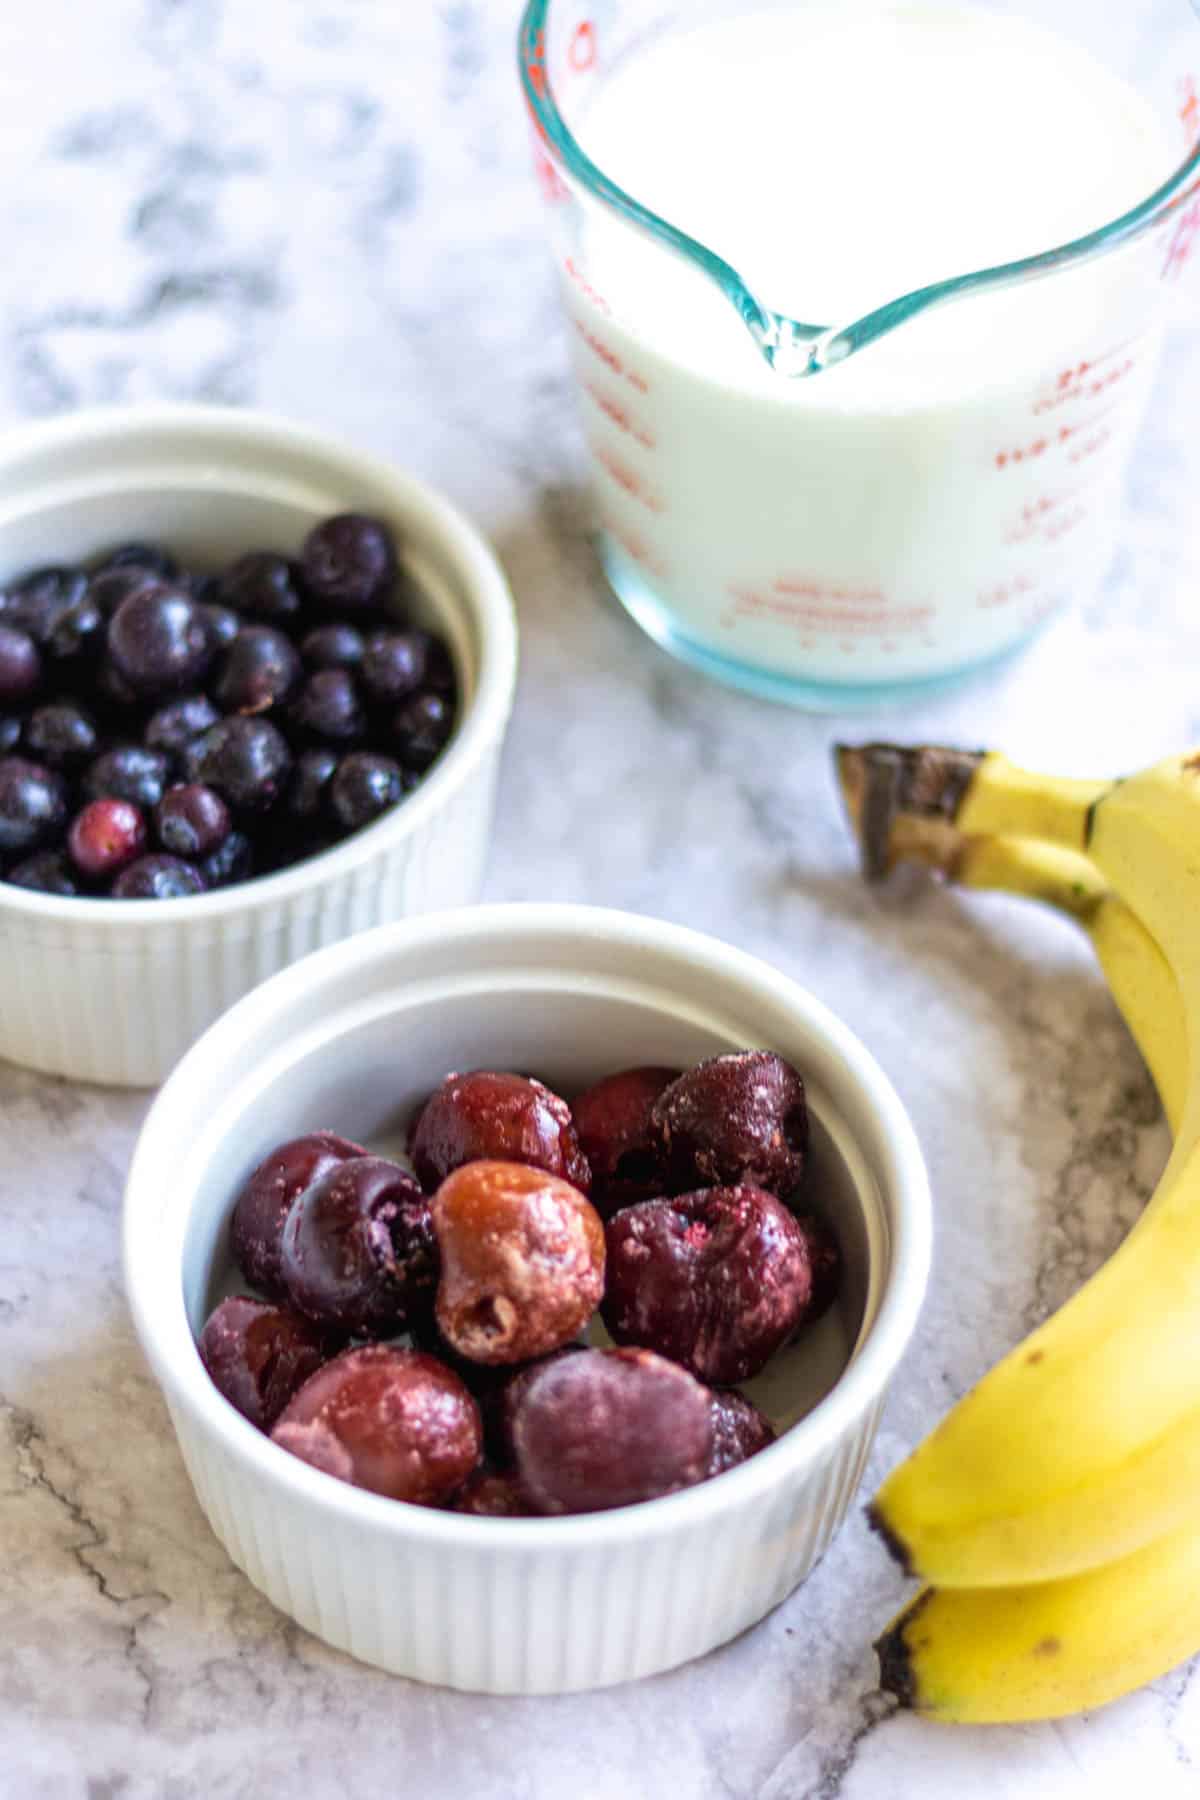 Smoothie ingredients including cherries, blueberries, bananas, and milk.